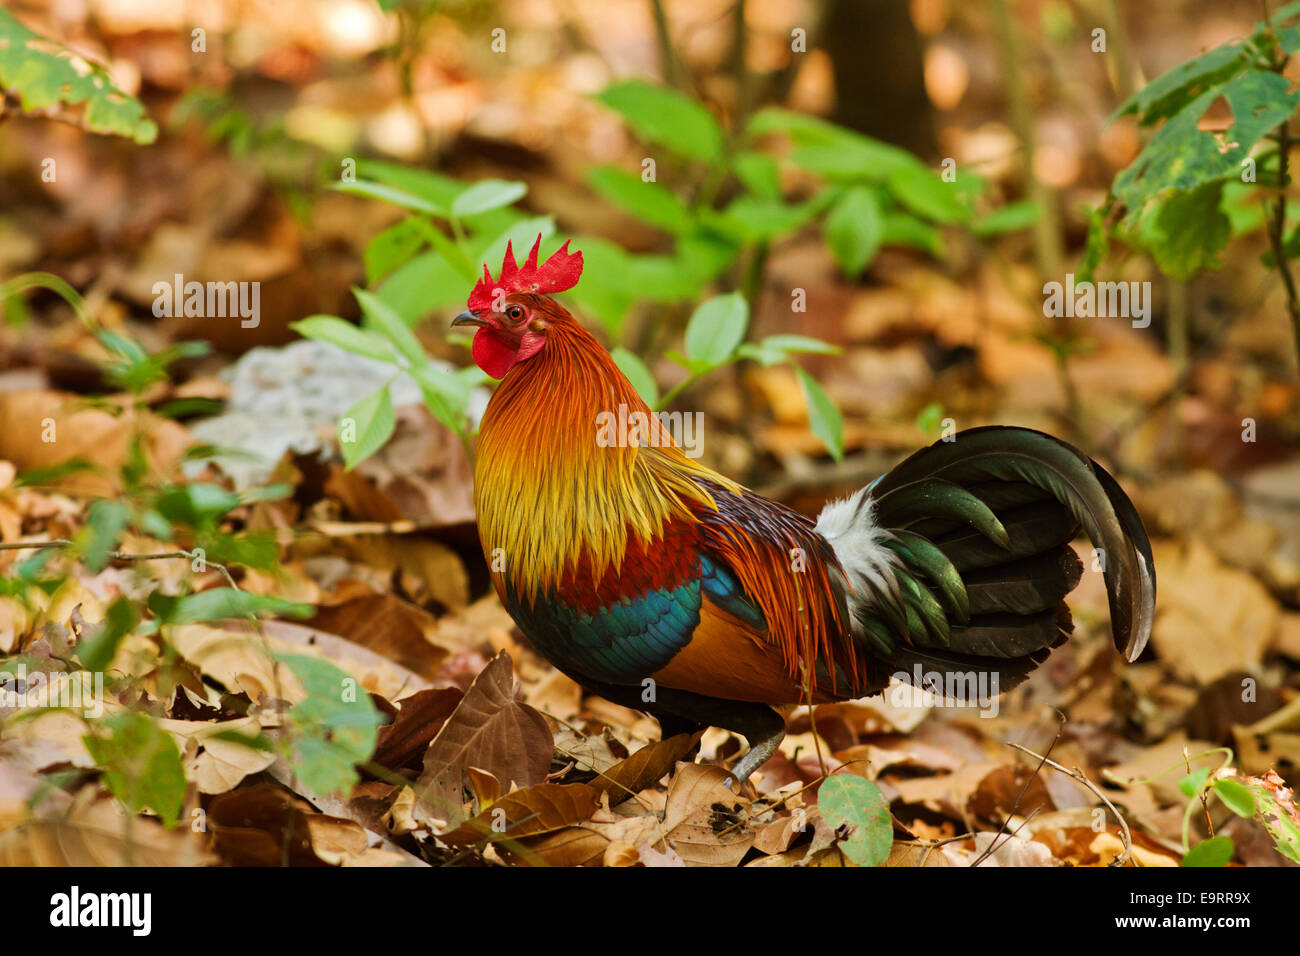 Red Indian Jungle Fowl, Corbett National Park, India Stock Photo Alamy